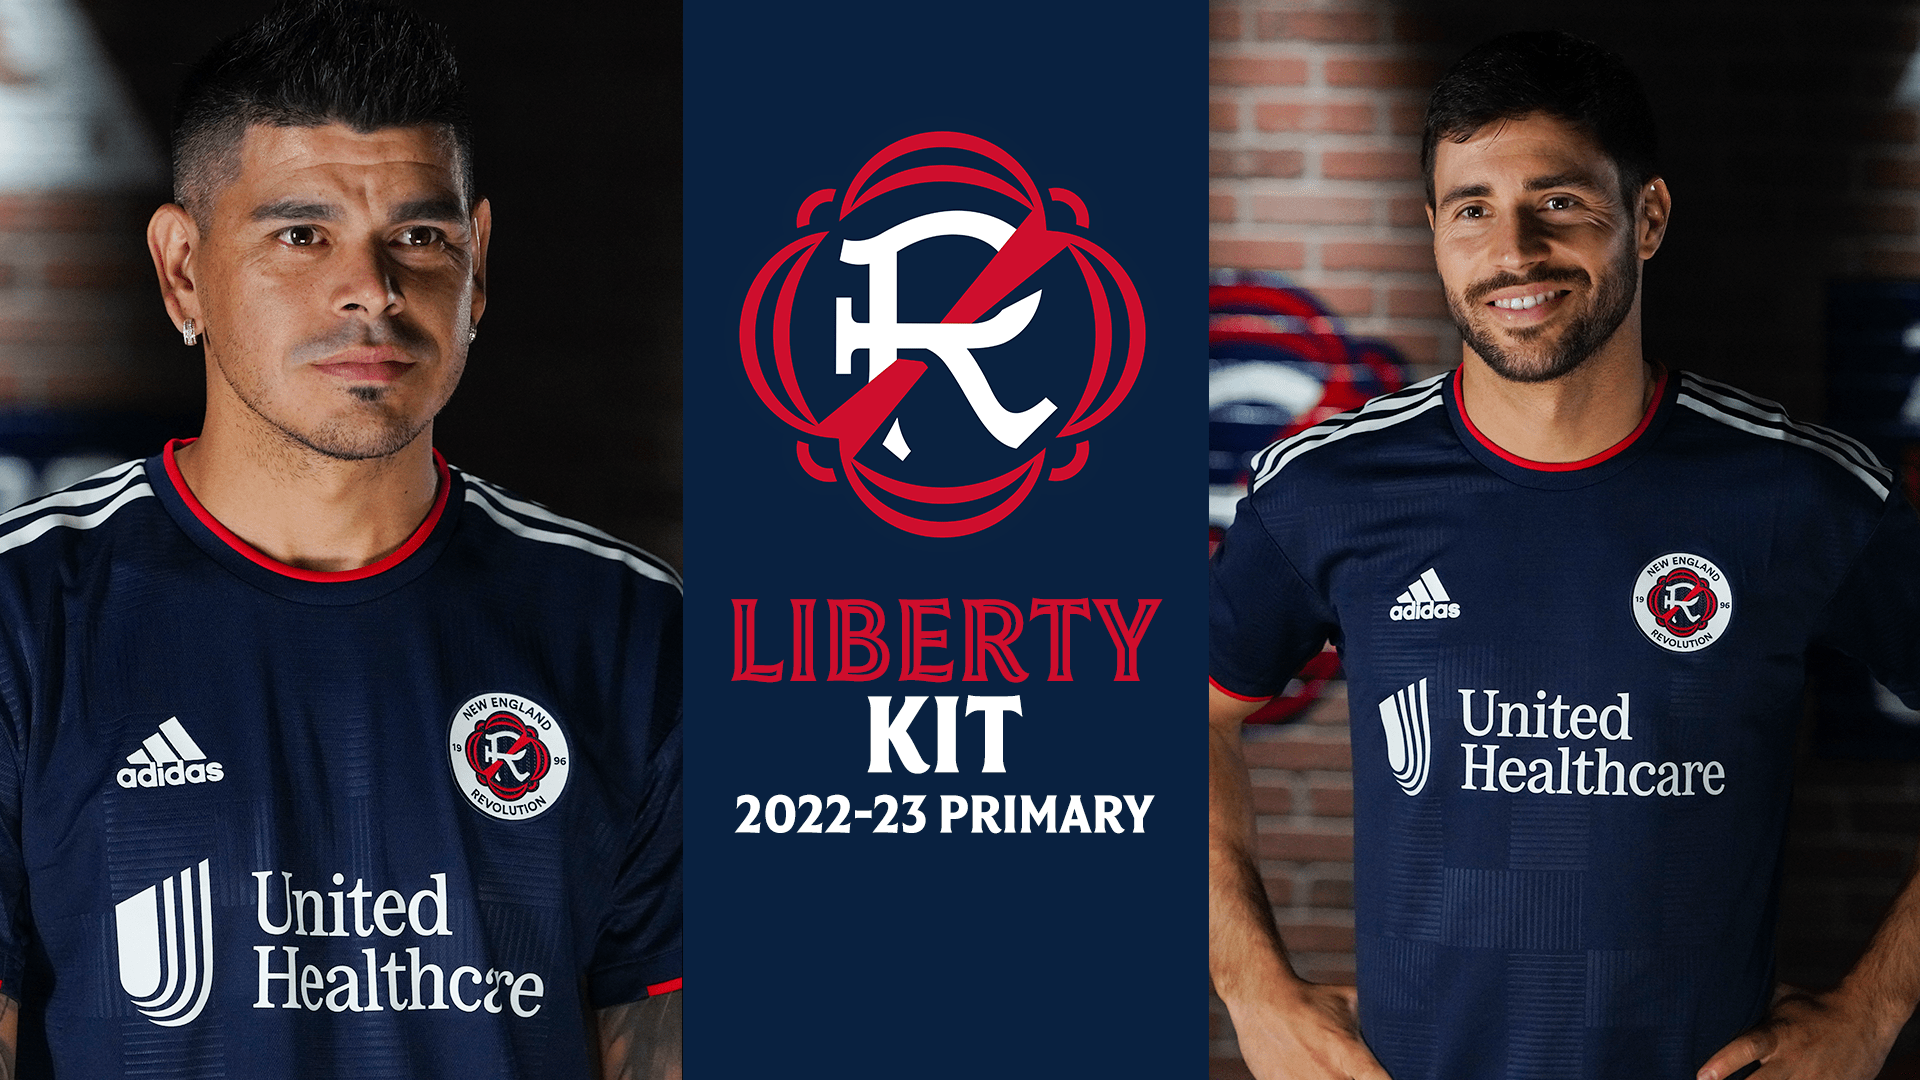 New England Revolution unveil “Liberty” kit ahead of 2022 season